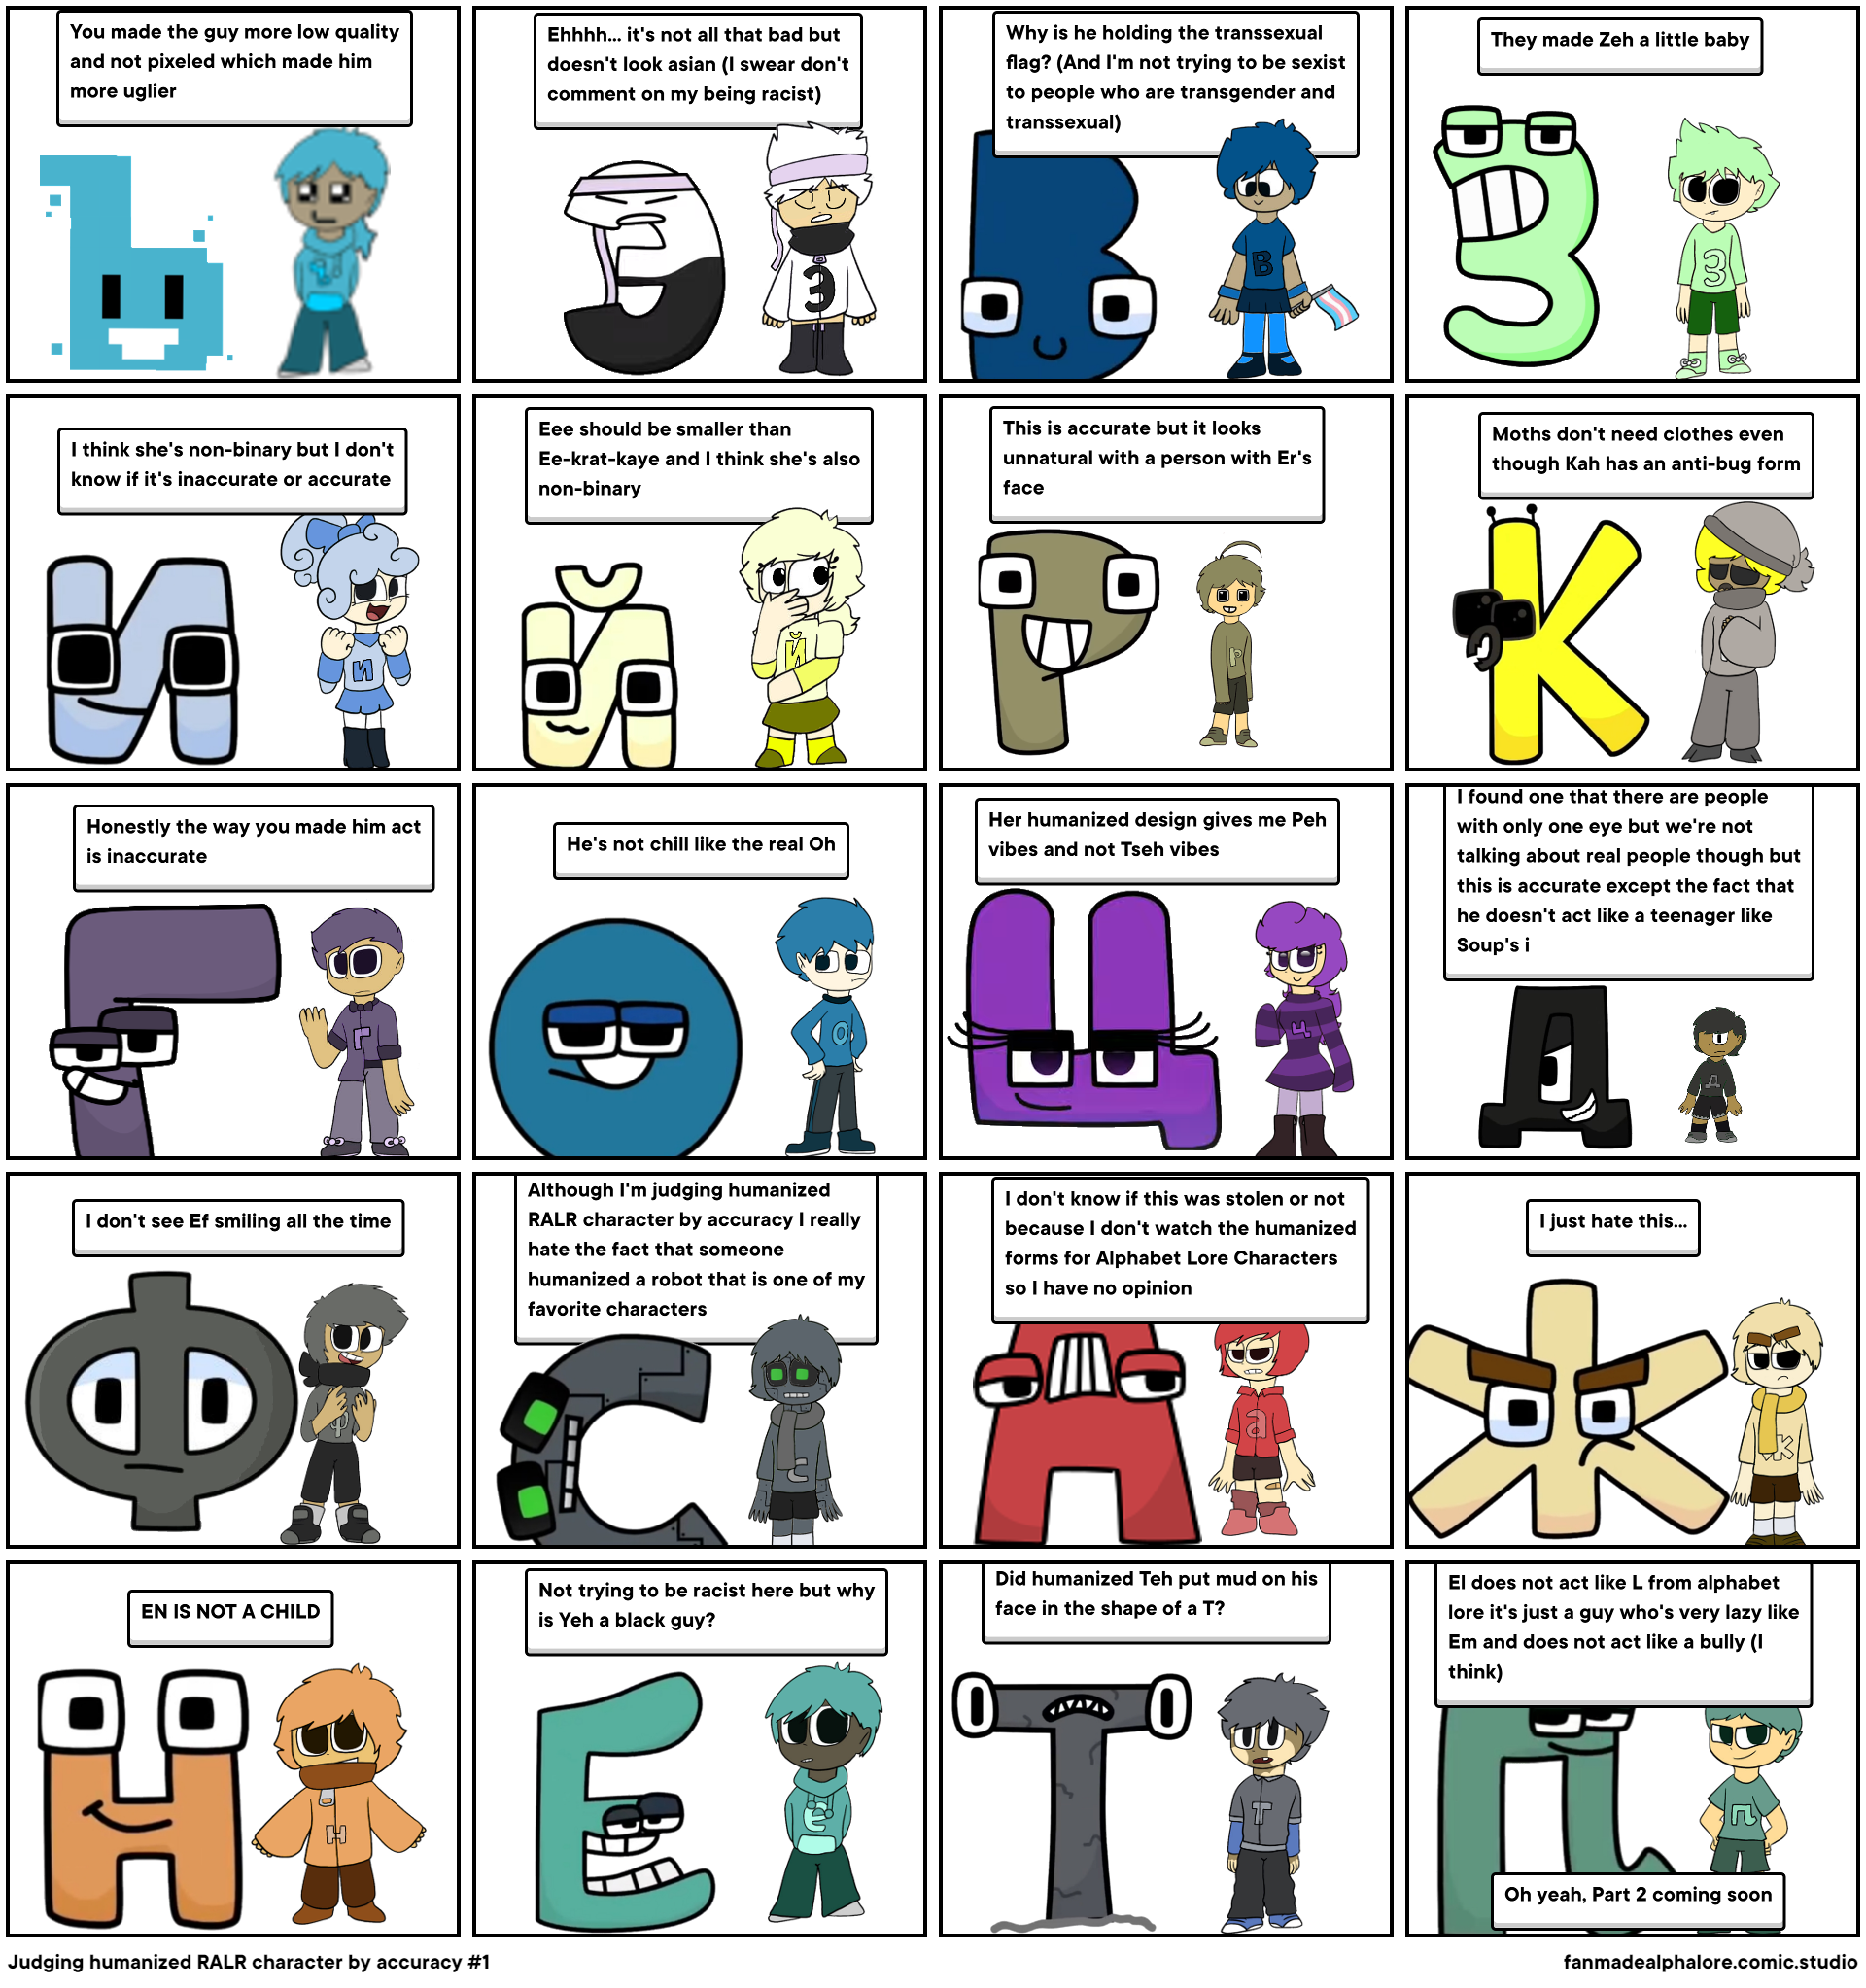 Hm, Today Alphabet Lore Comic Studio looks Different : r/alphabetfriends